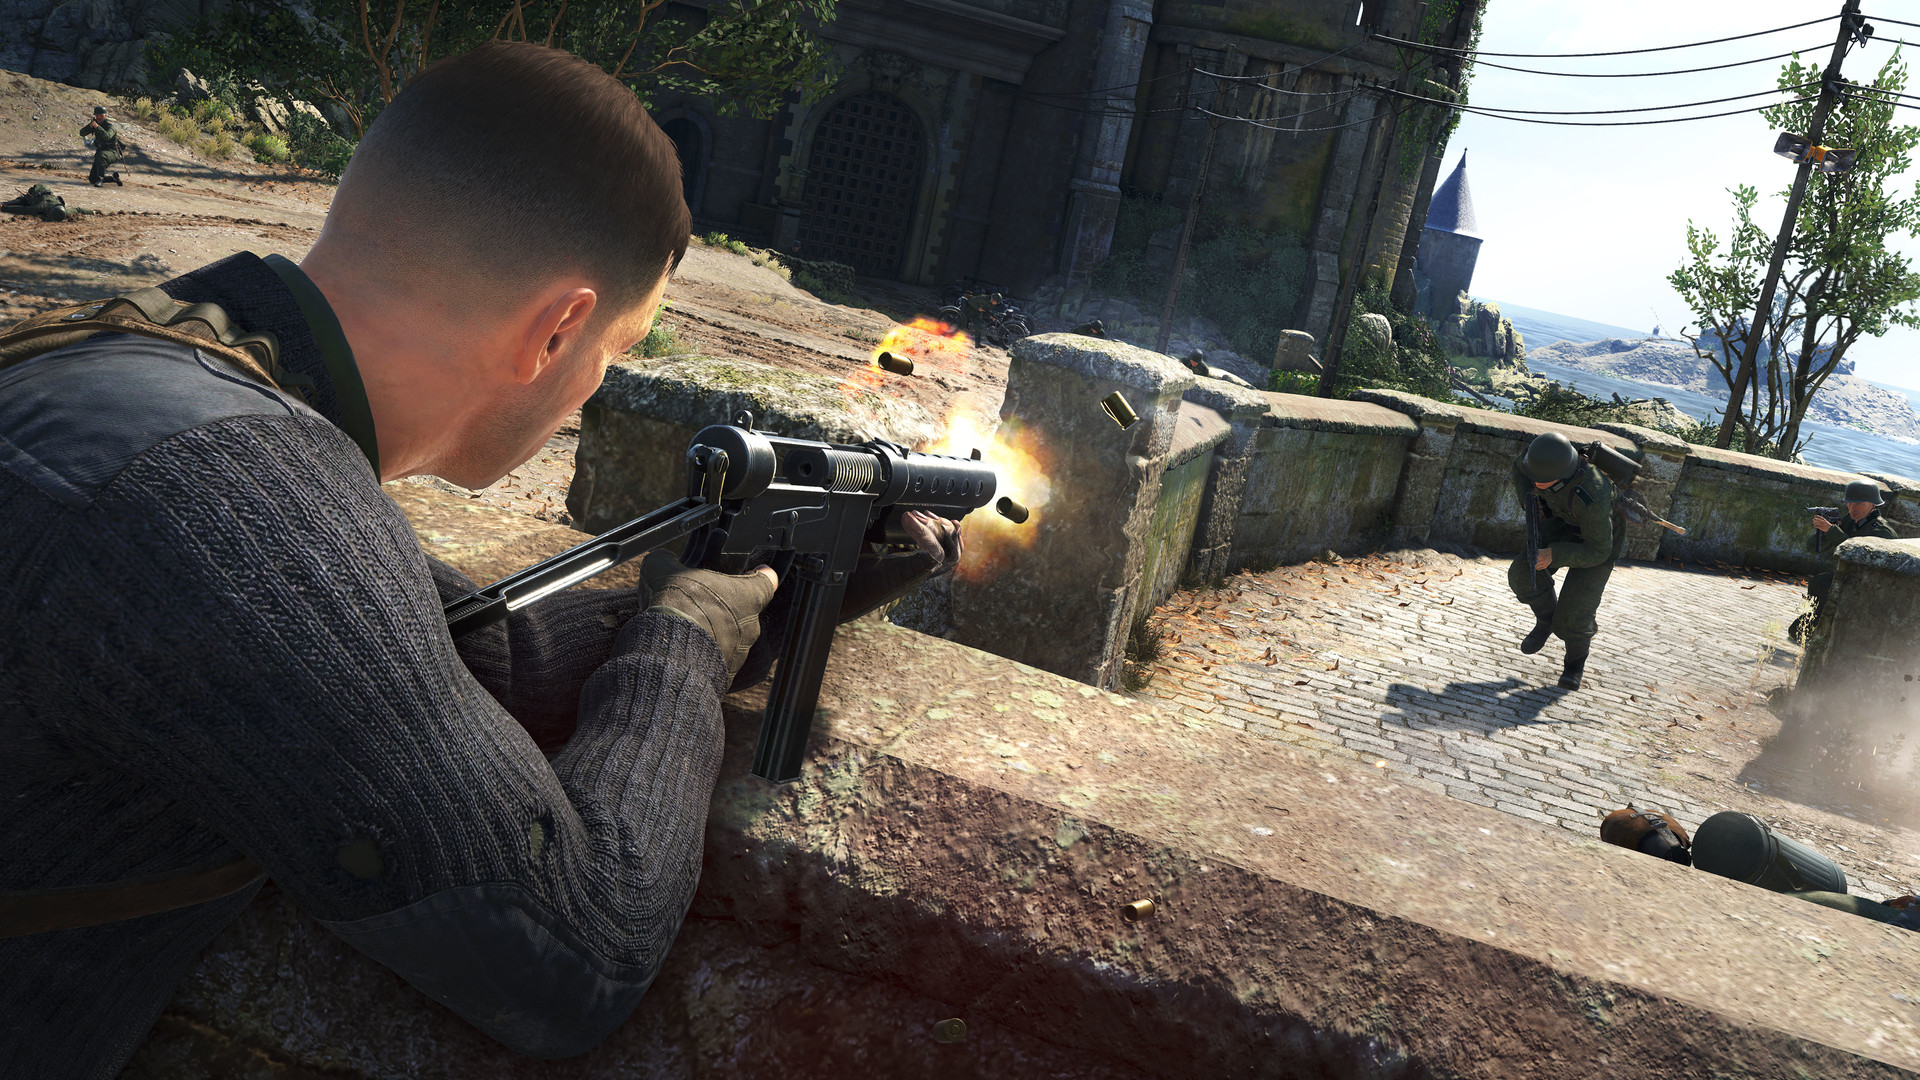 Sniper Elite 5 - Season Pass One DLC AR XBOX One / Windows 10 CD Key